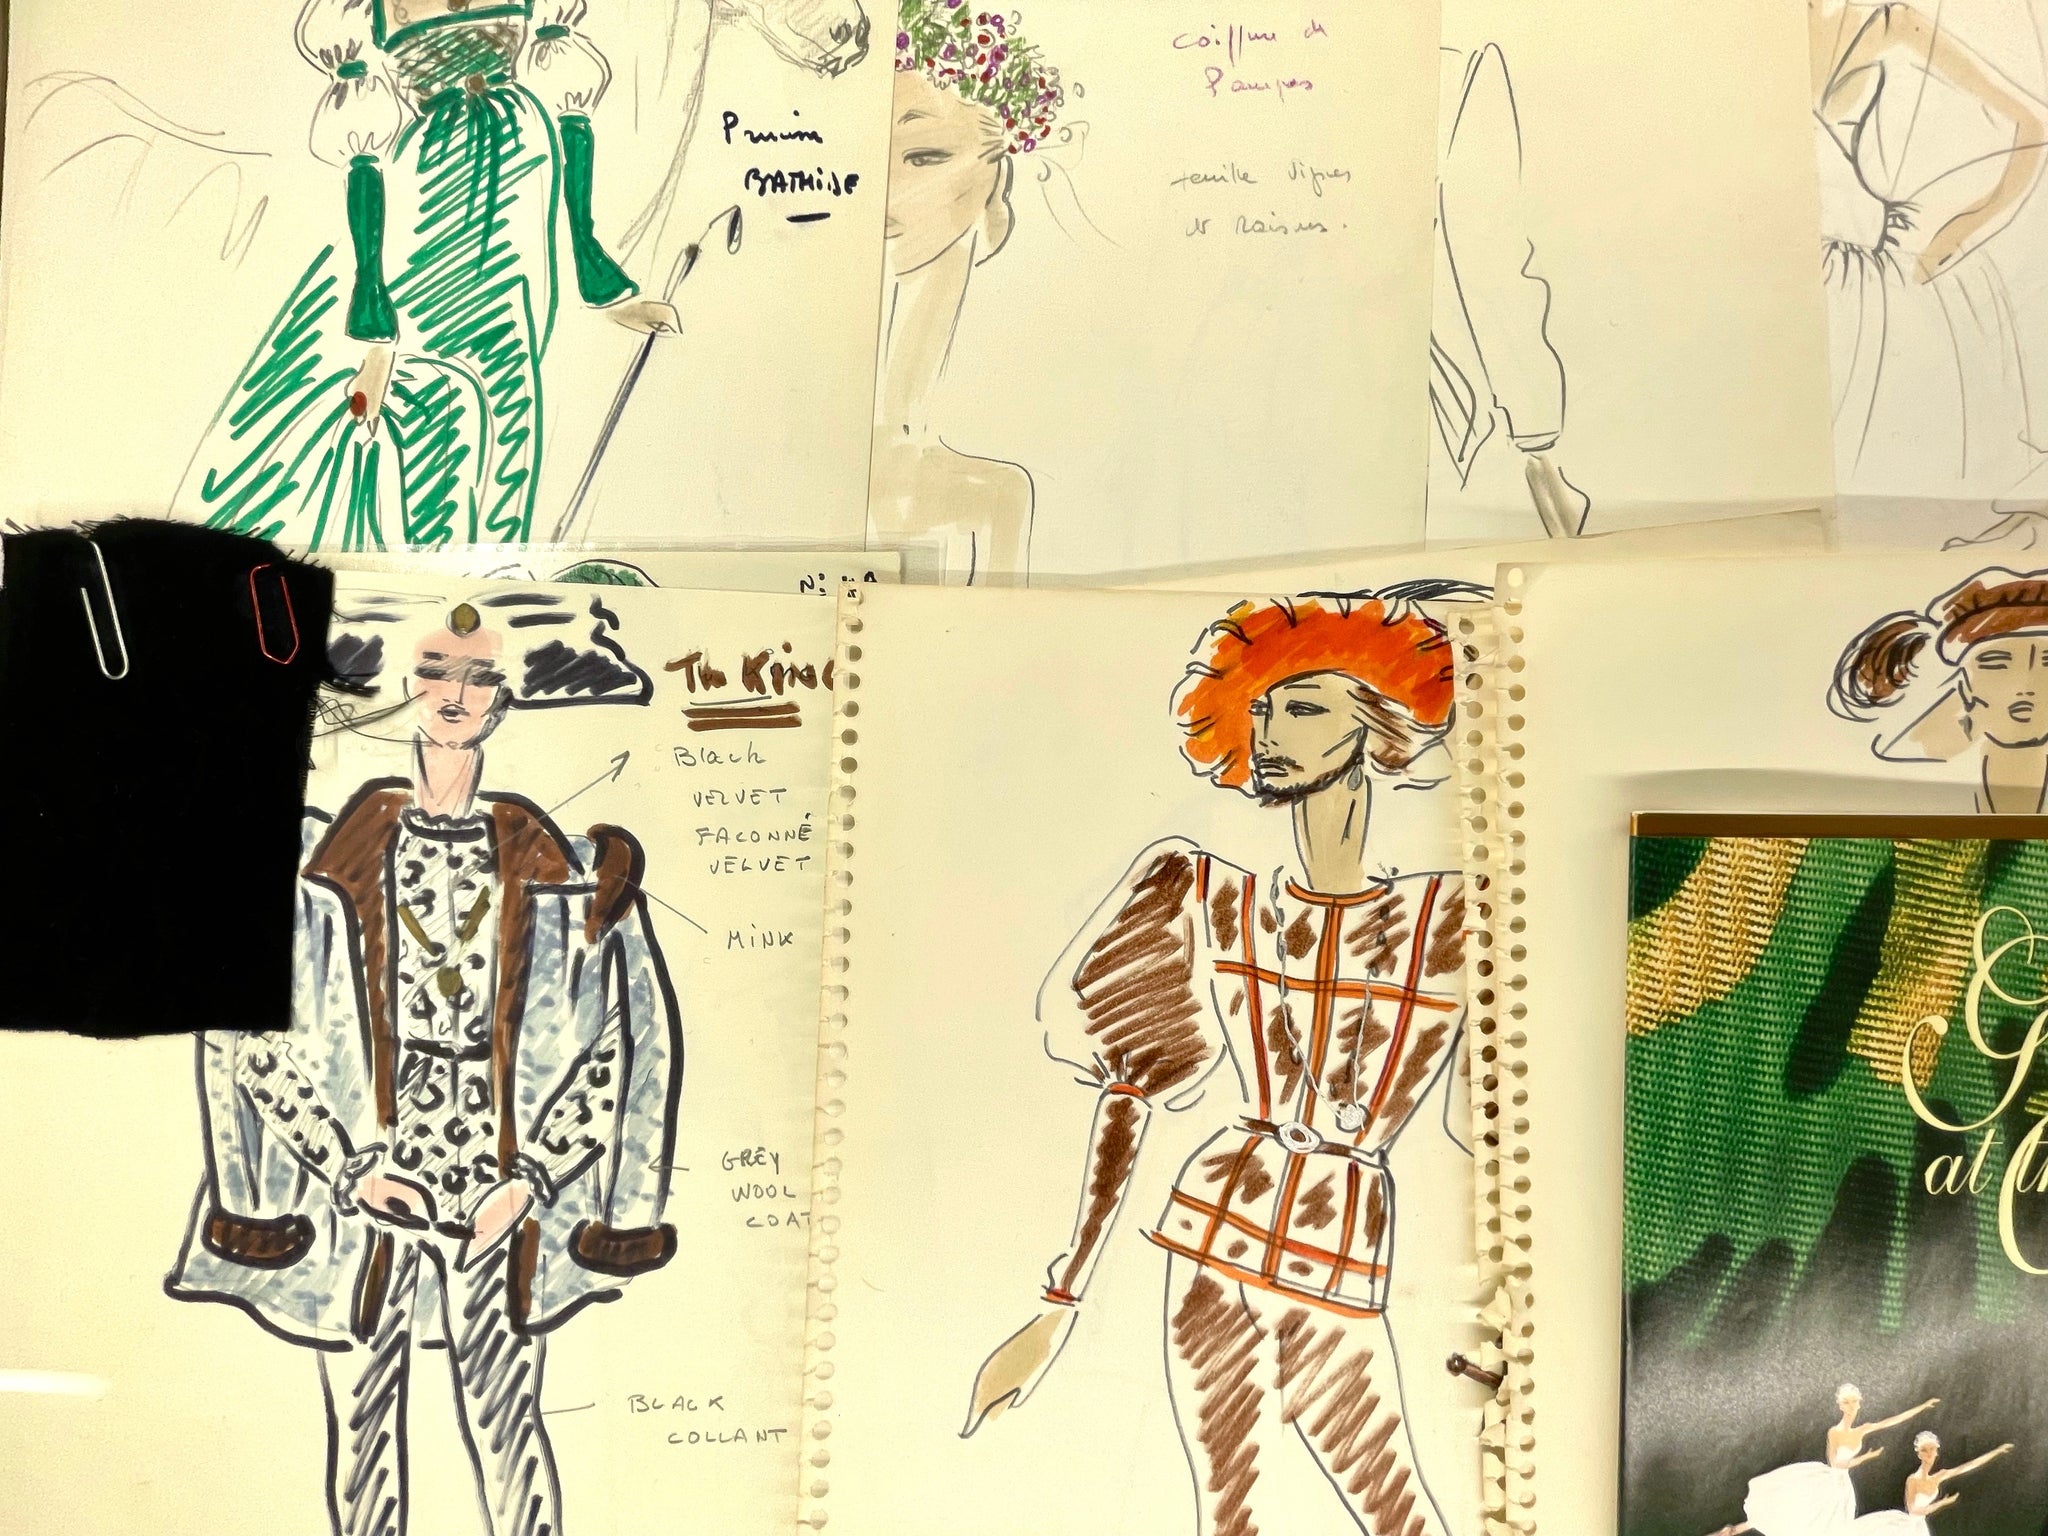 Givenchy, Hubert de. (1927–2018) "Giselle" - Archive of  Costume Designs for the 1997 Bolshoi Ballet Production